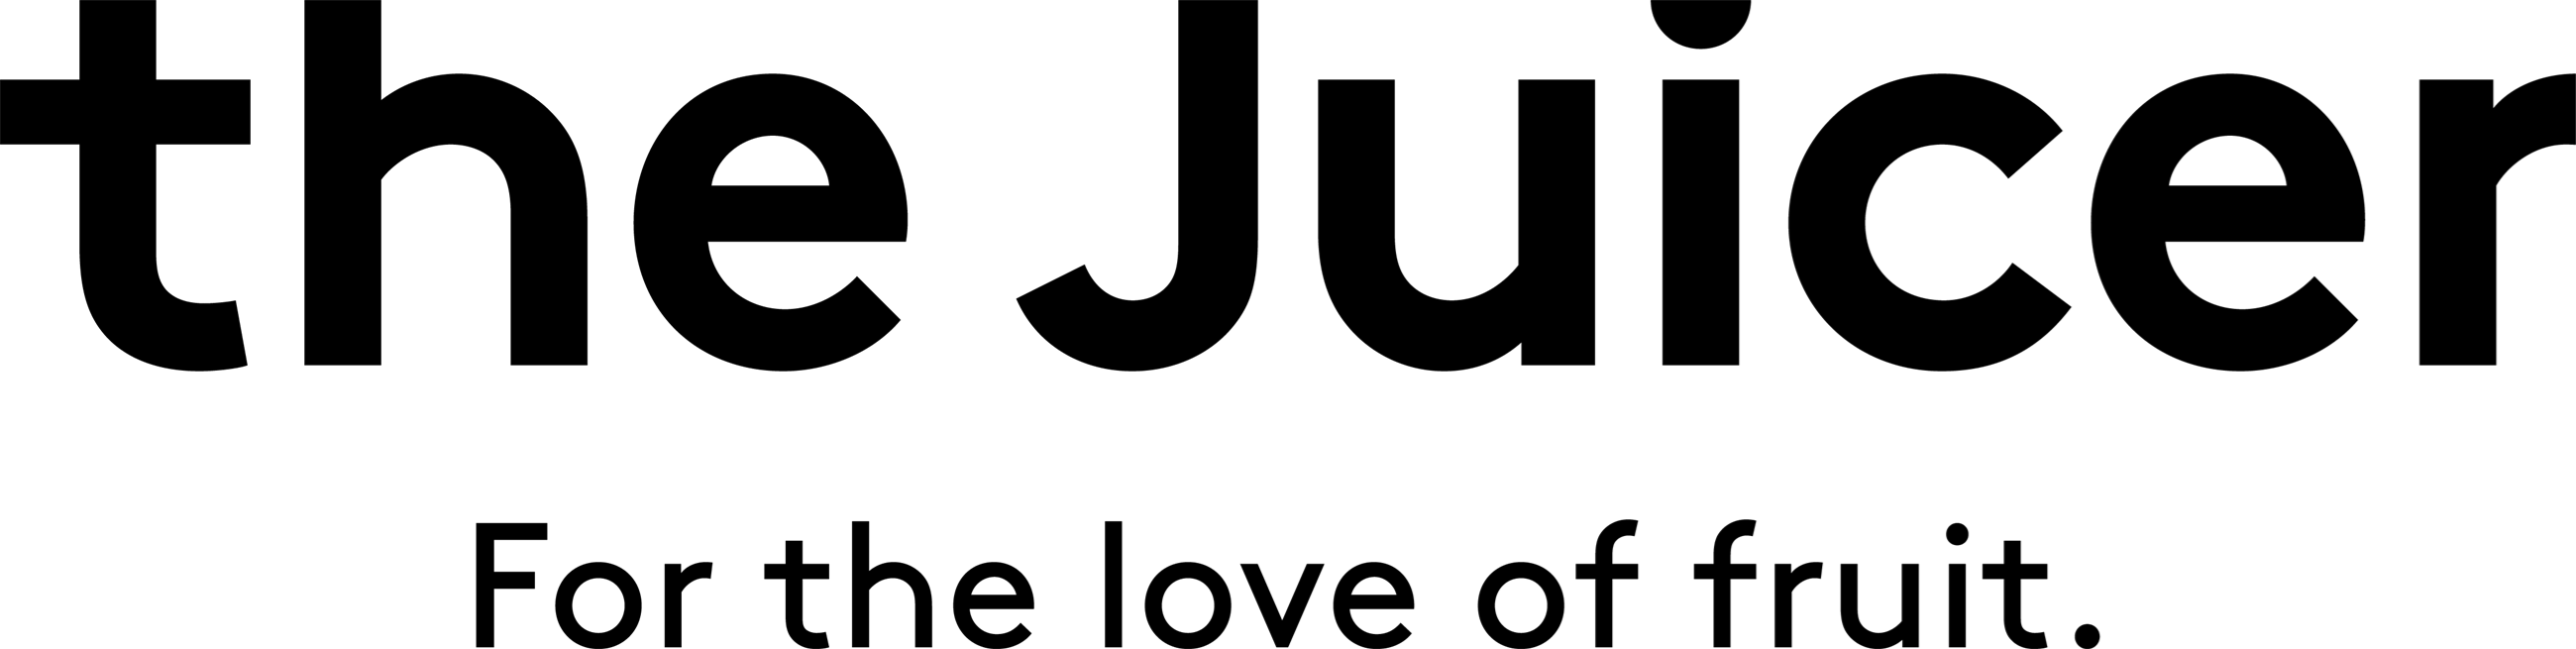 the juicer logo payoff black